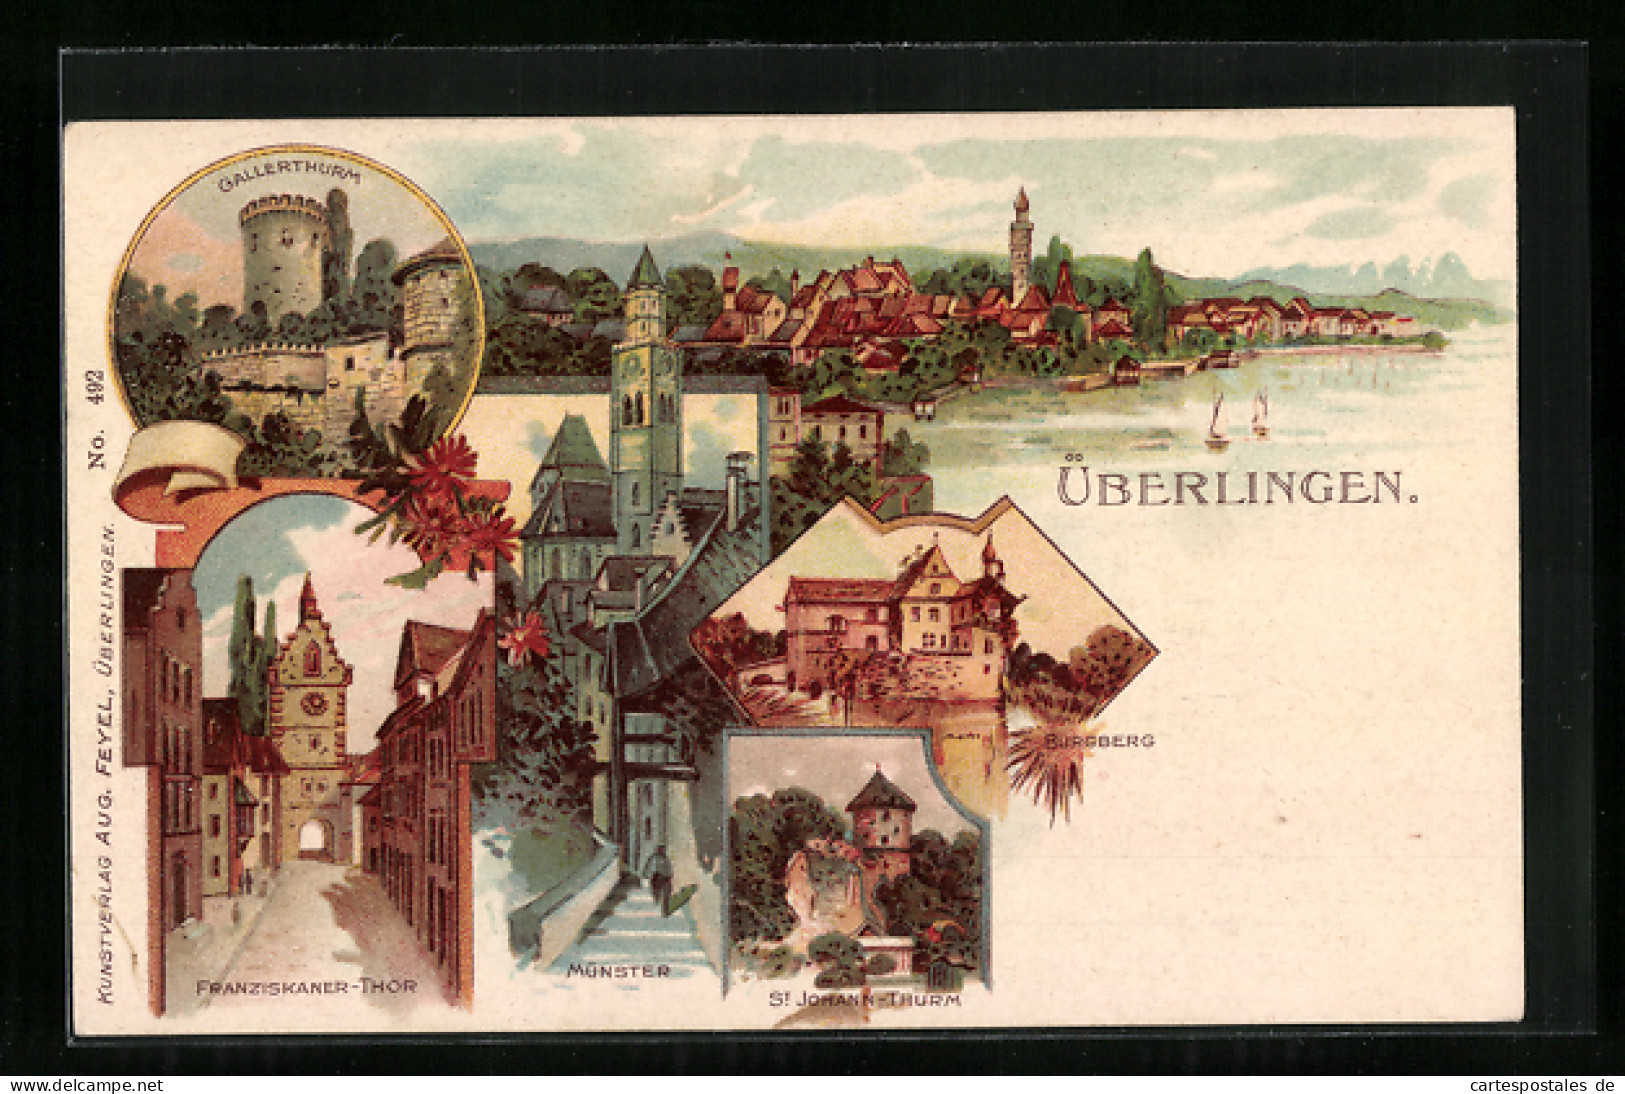 Lithographie Überlingen, Franziskaner-Thor, Münster, St. Johann-Thurm  - Überlingen